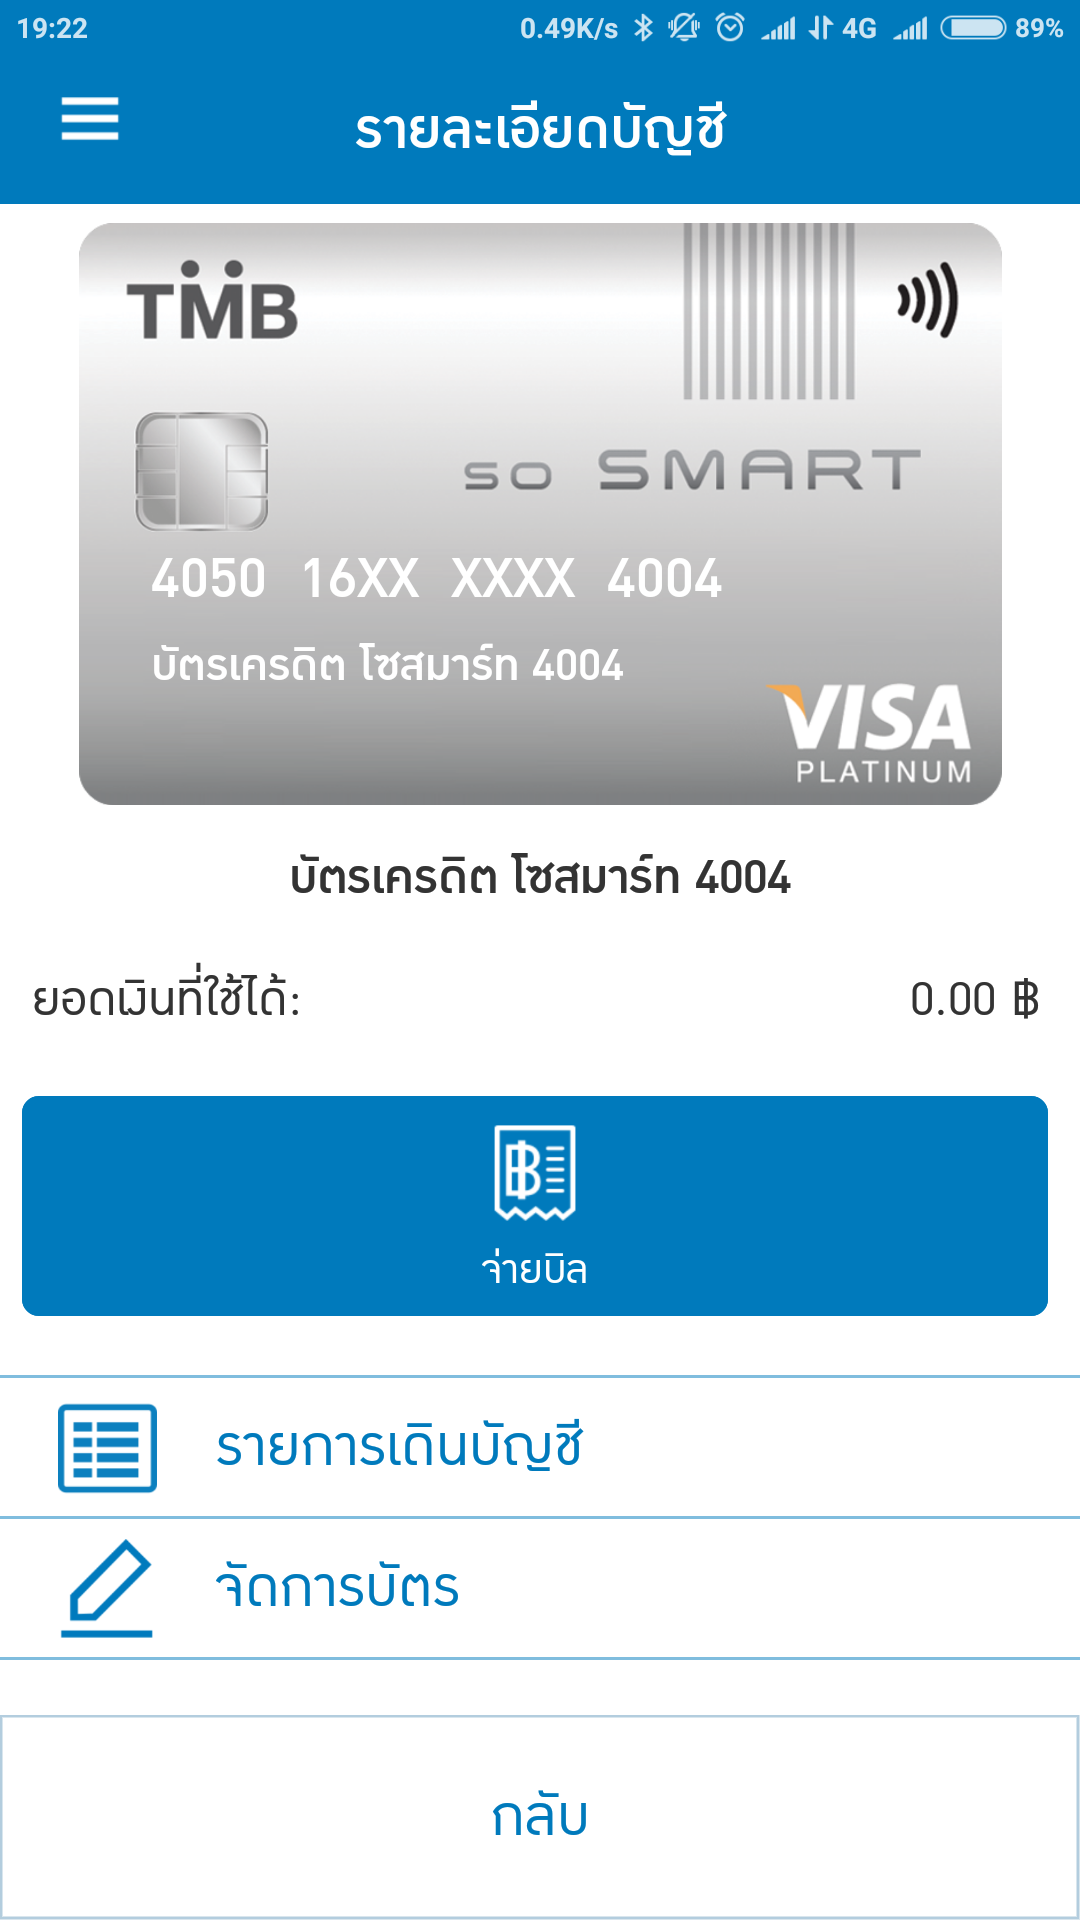 Tmb ใช้บัตรเครดิต So Smart ไม่ได้ครับ - Pantip